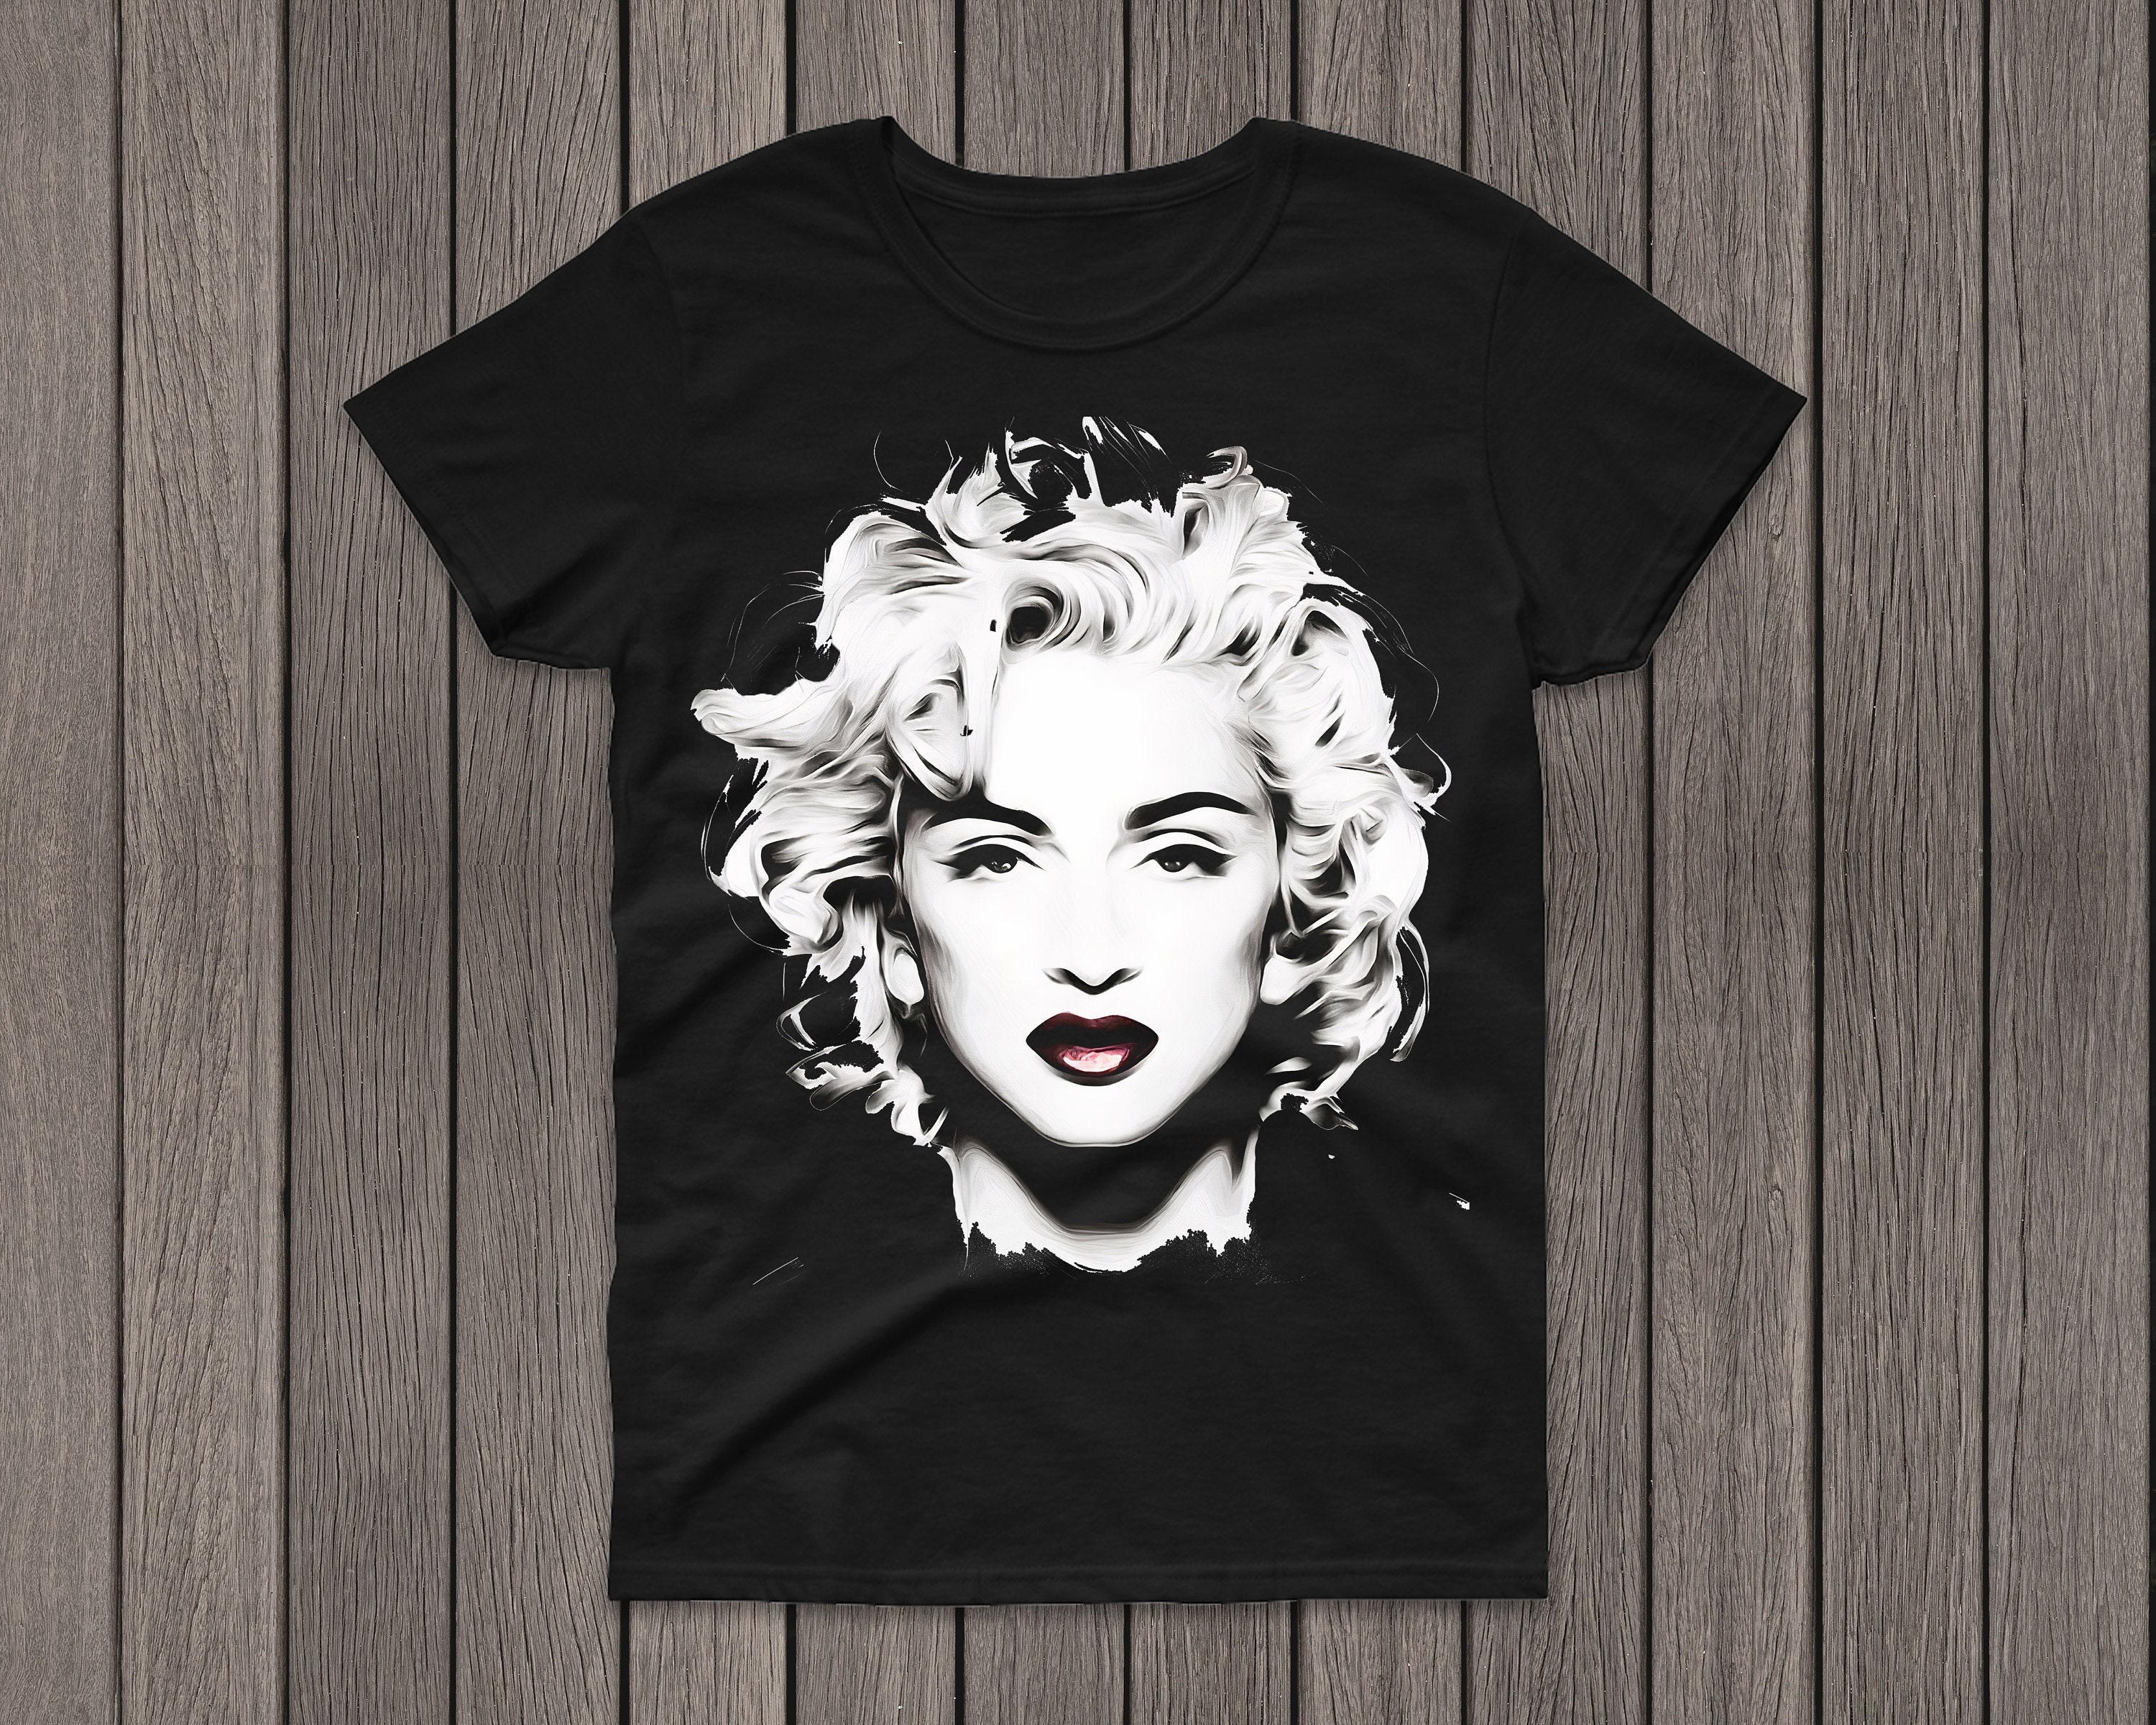 Madonna Retro Vintage T-Shirt, Madonna Shirt, Music Shirt